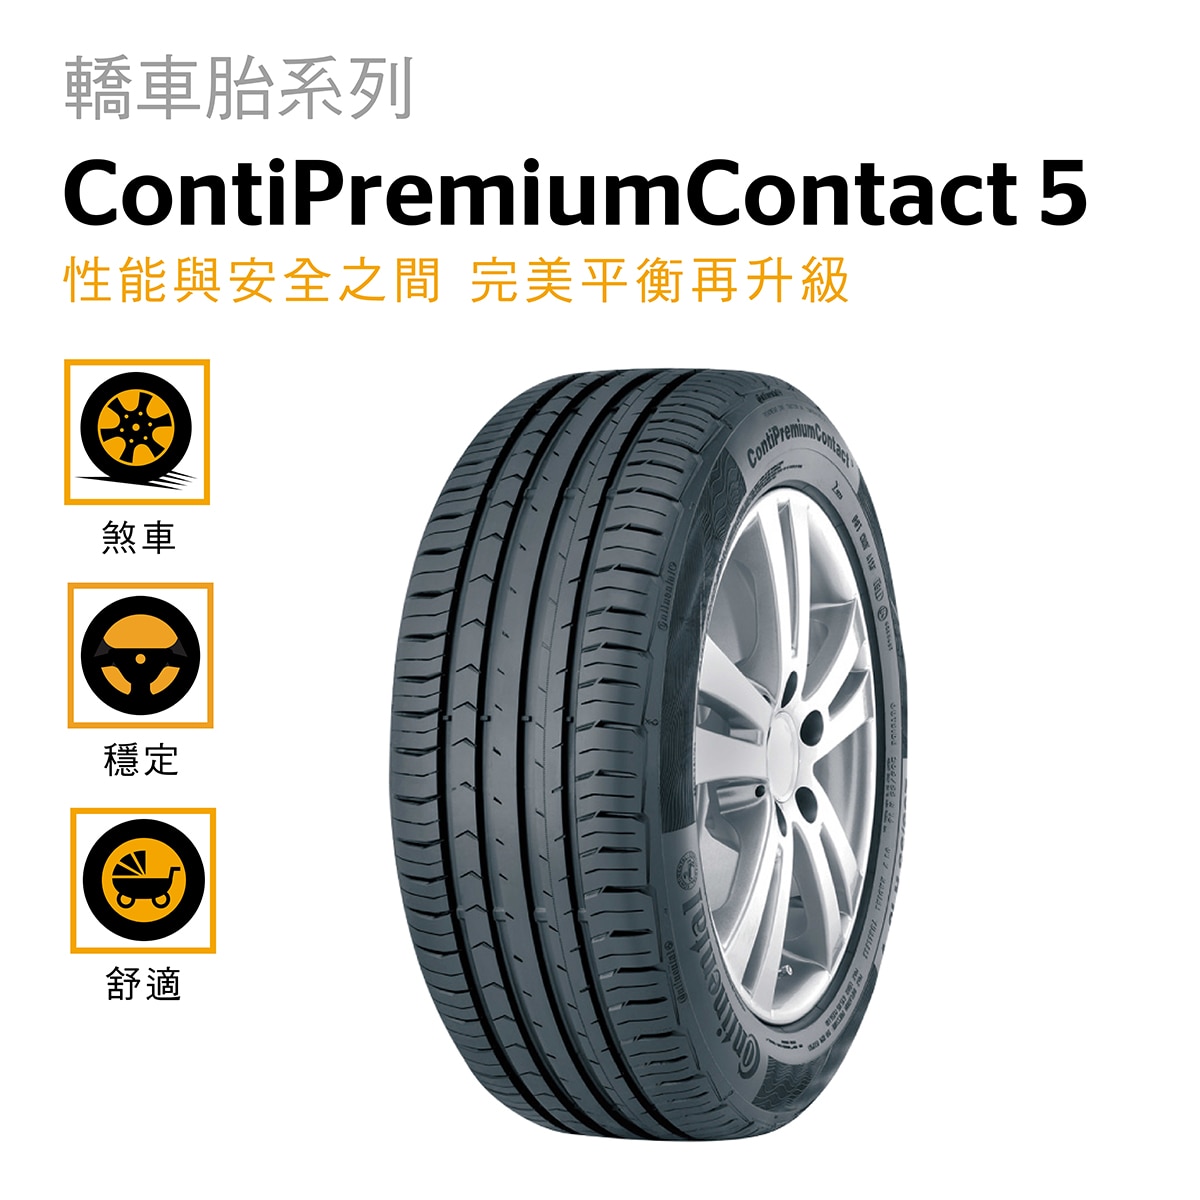 Continental 馬牌輪胎Conti Premium Contact 5 專為中型車和高級房車研發，在乾濕地或各種路況下，都能展現極佳的抓地力和操控性，體驗舒適的駕馭感受之餘，也提升了燃油經濟性。